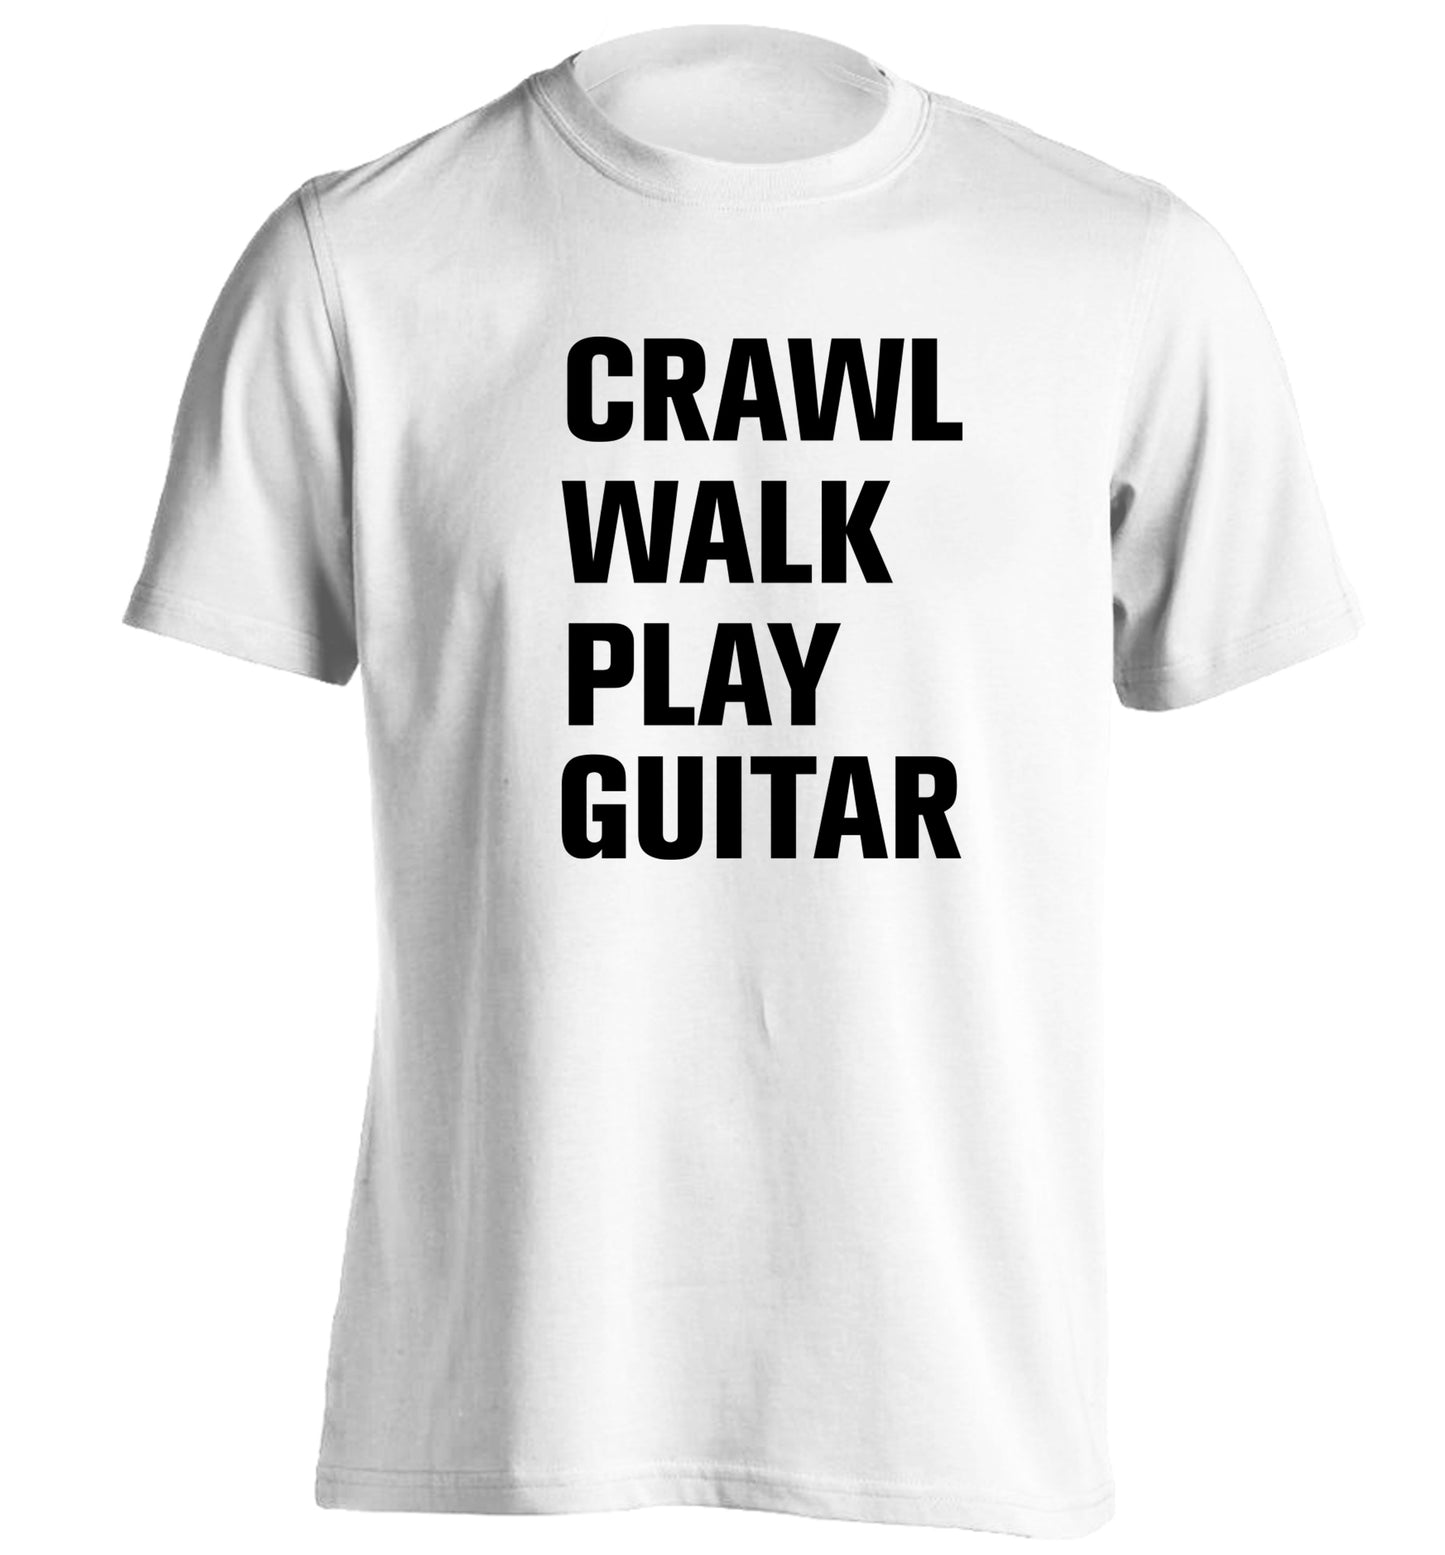 Crawl walk play guitar adults unisex white Tshirt 2XL